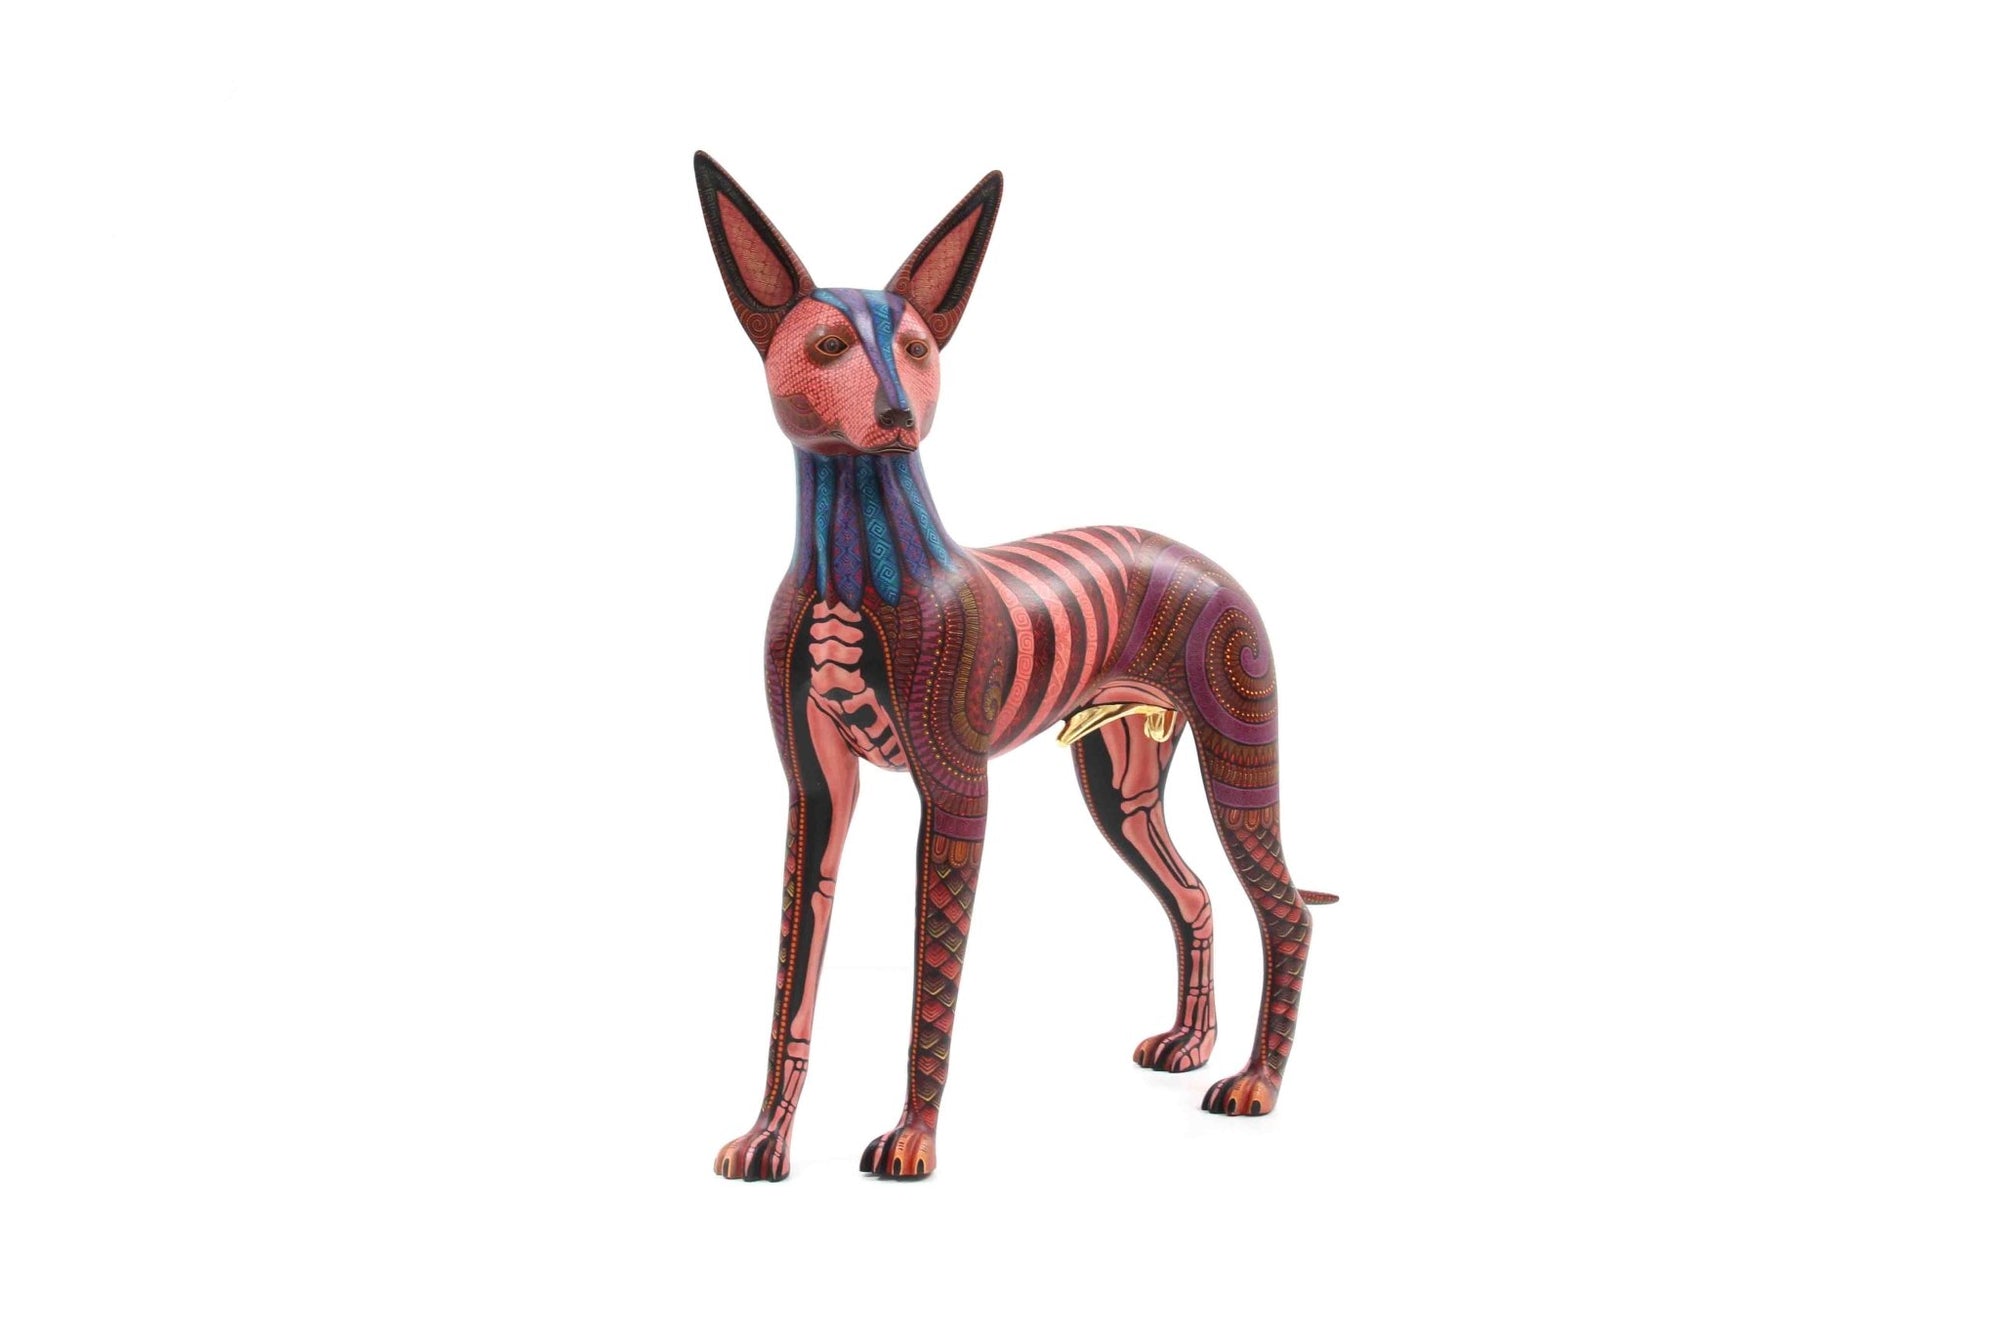 Dog Alebrije - Xoloitzcuintle #1 - Eternal Rest - Huichol Art - Marakame